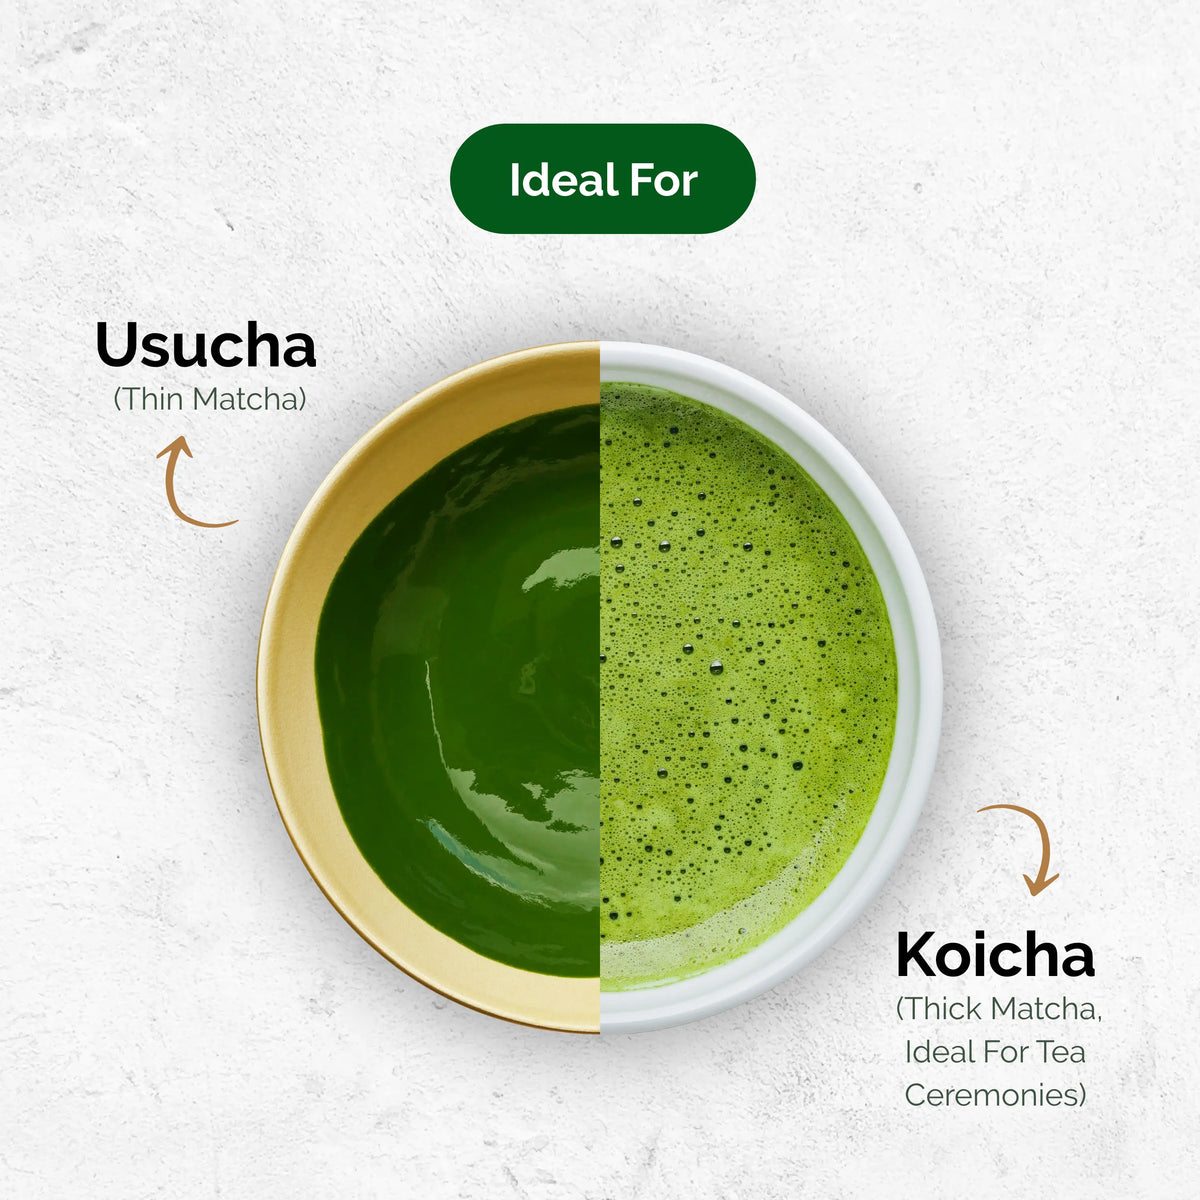 Culinary Grade Matcha Green Tea - 30g Tin | 100% Authentic Japanese Matcha